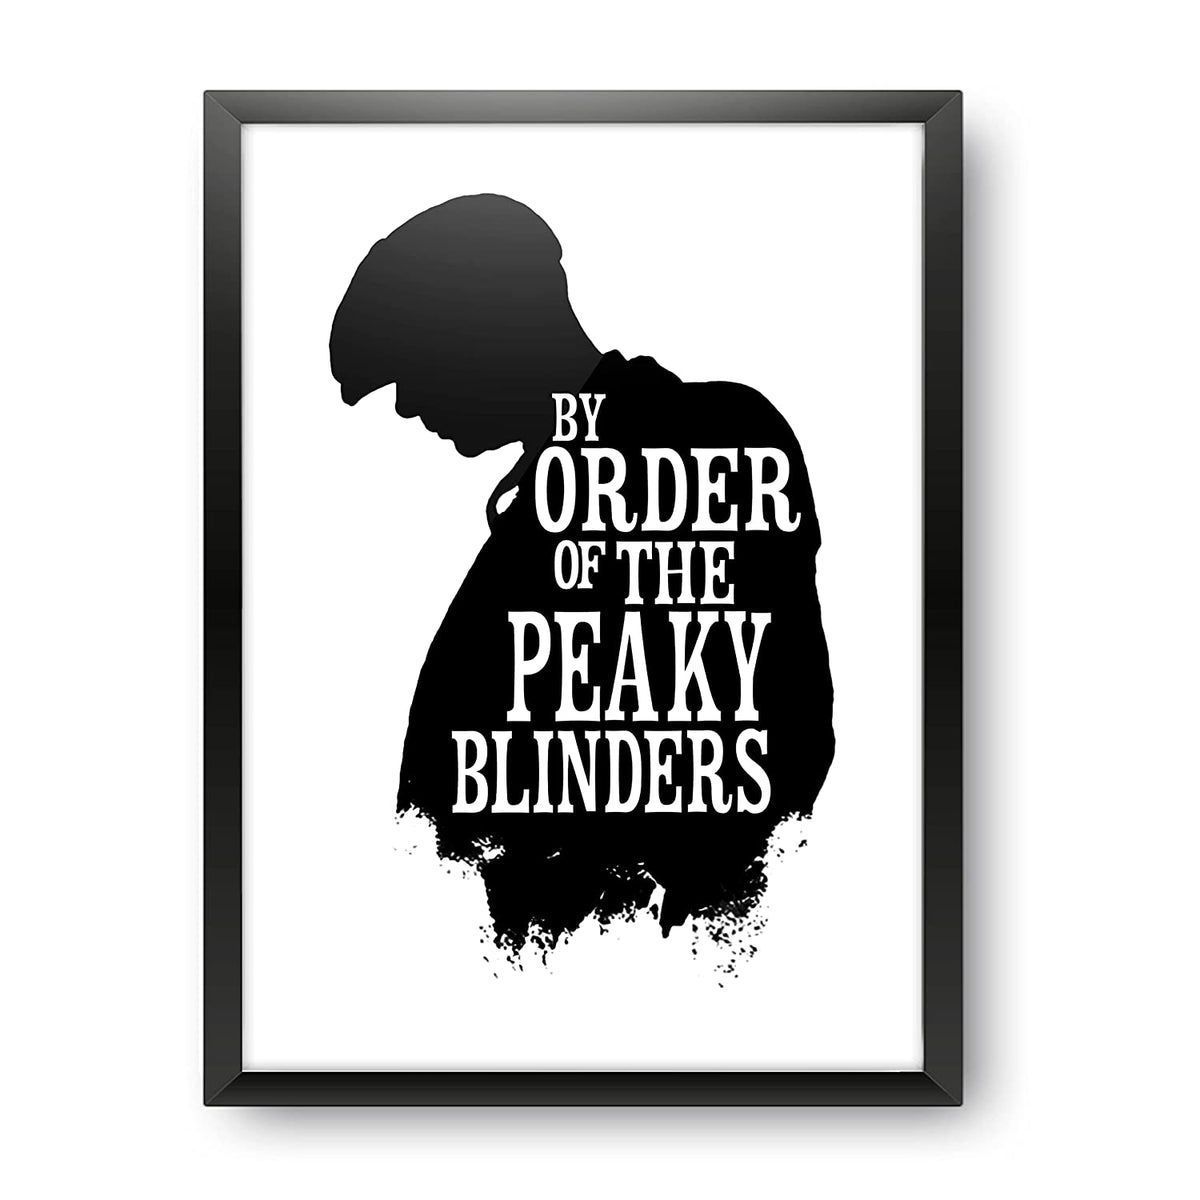 By Order Of The Peaky Blinders Wallpapers Top Free By Order Of The Peaky Blinders Backgrounds 